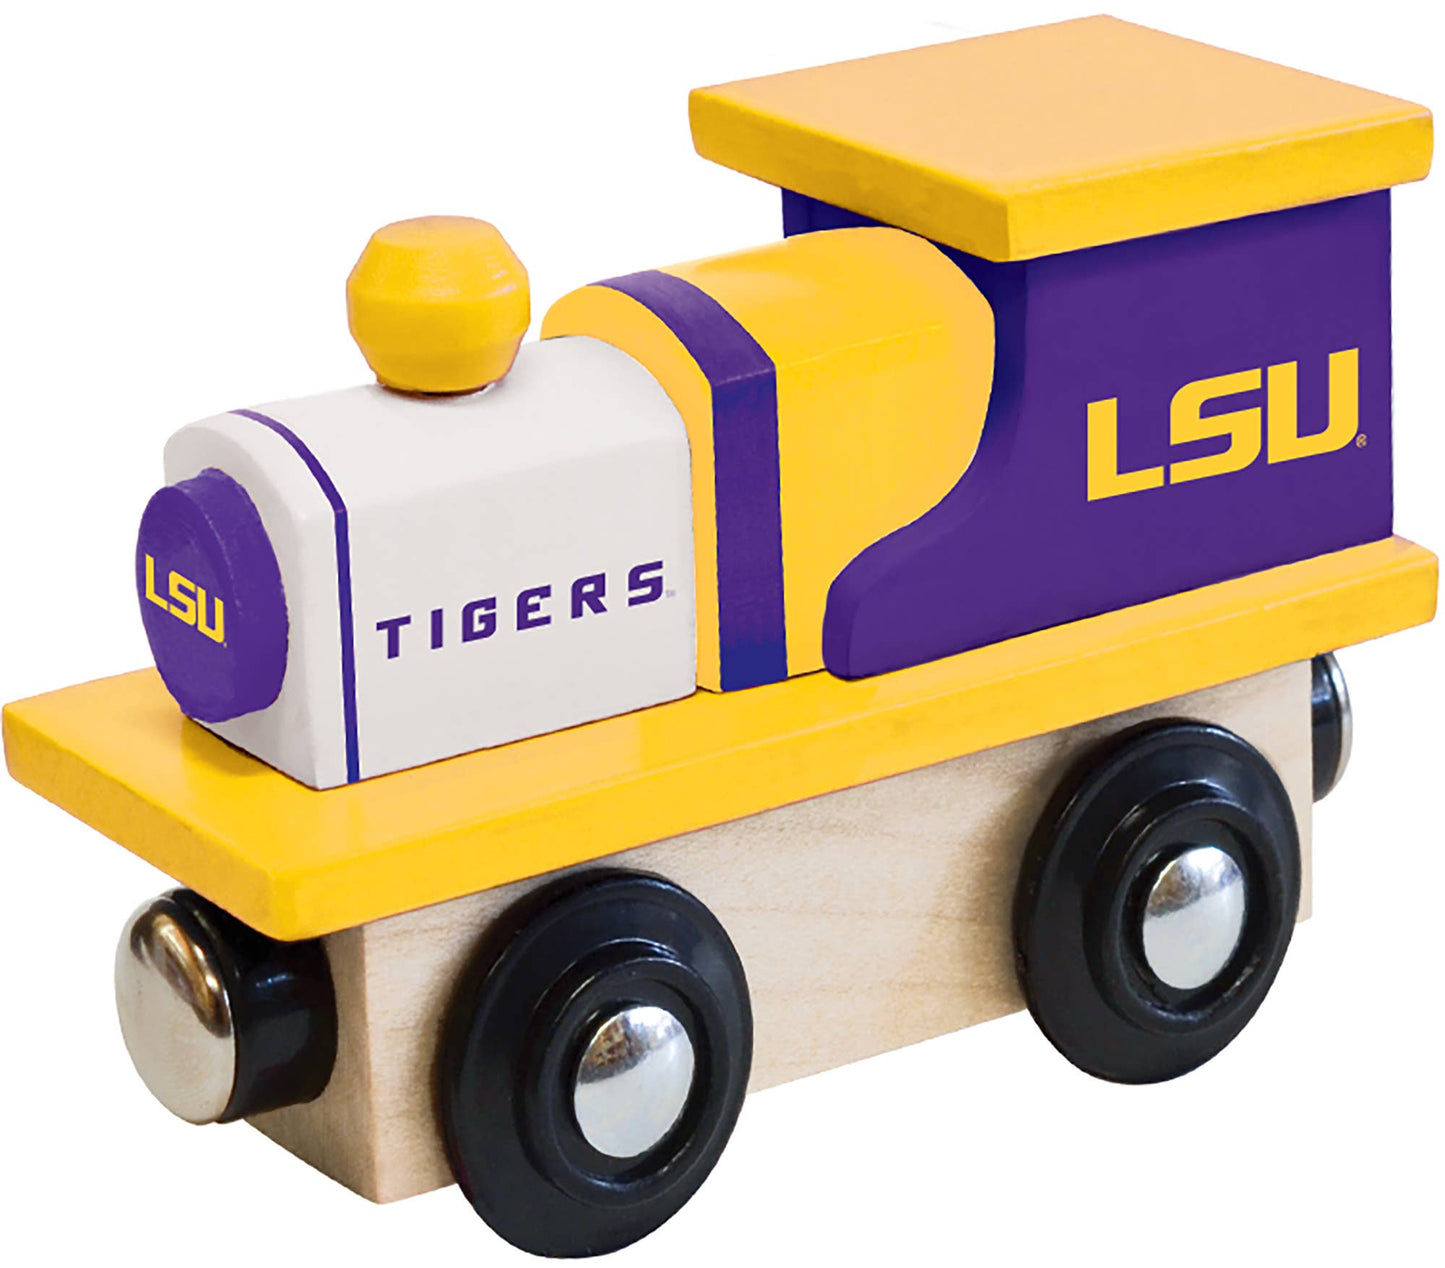 LSU Tigers Toy Train Engine